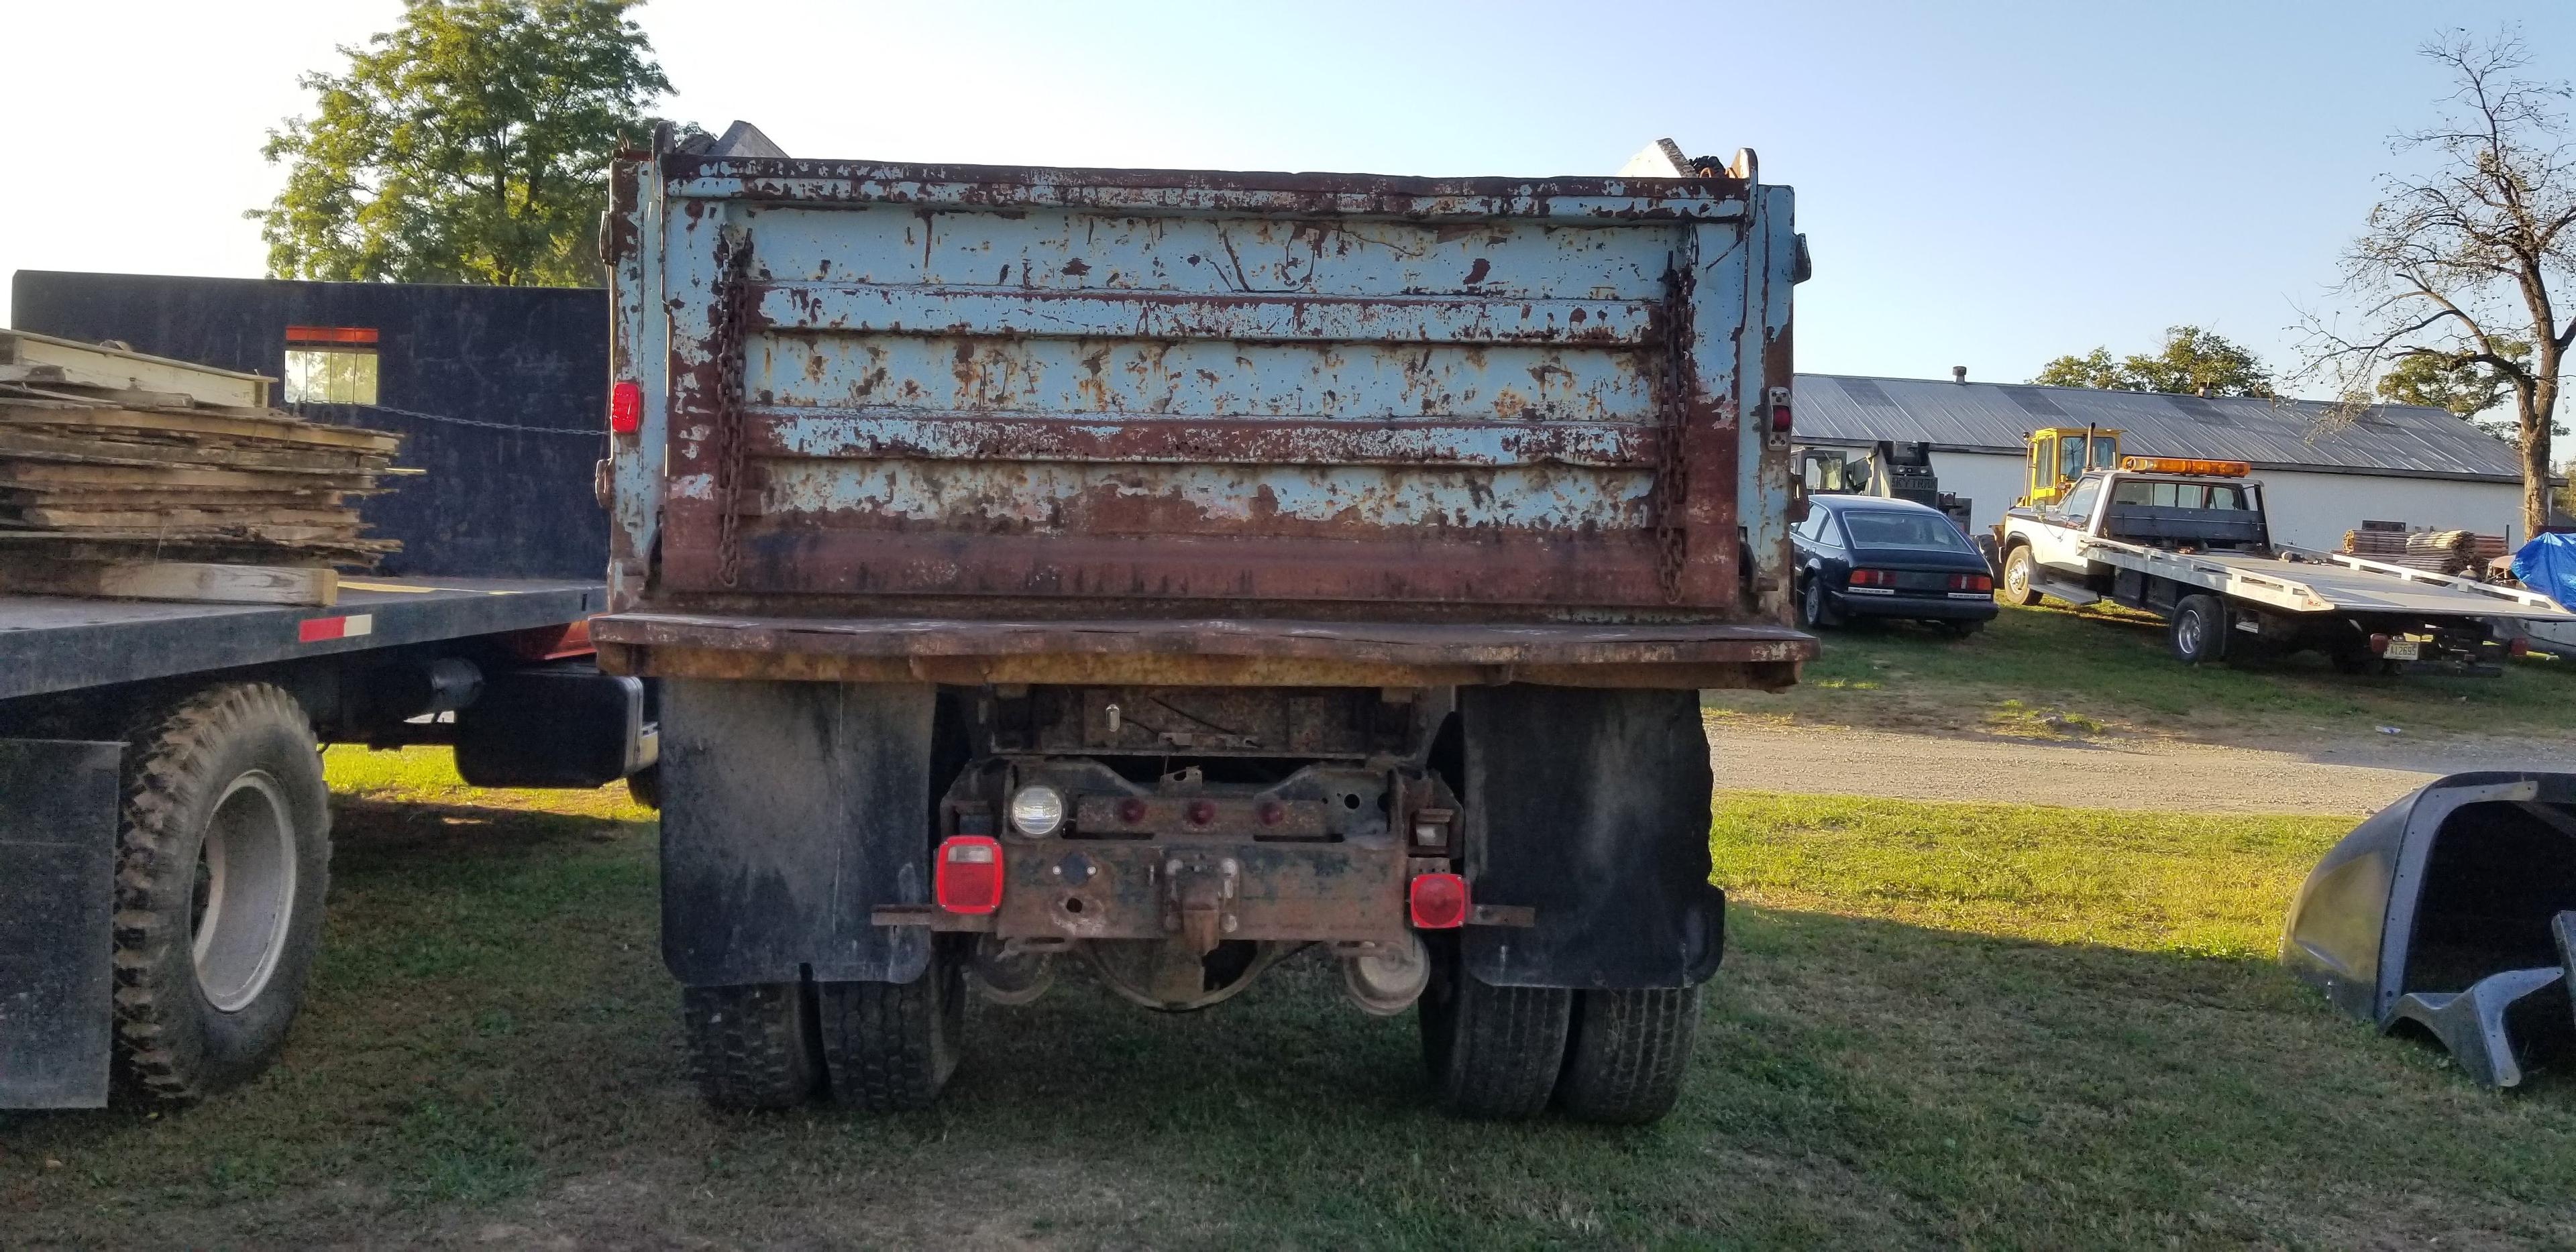 GMC 6500 Dump Truck W/Title